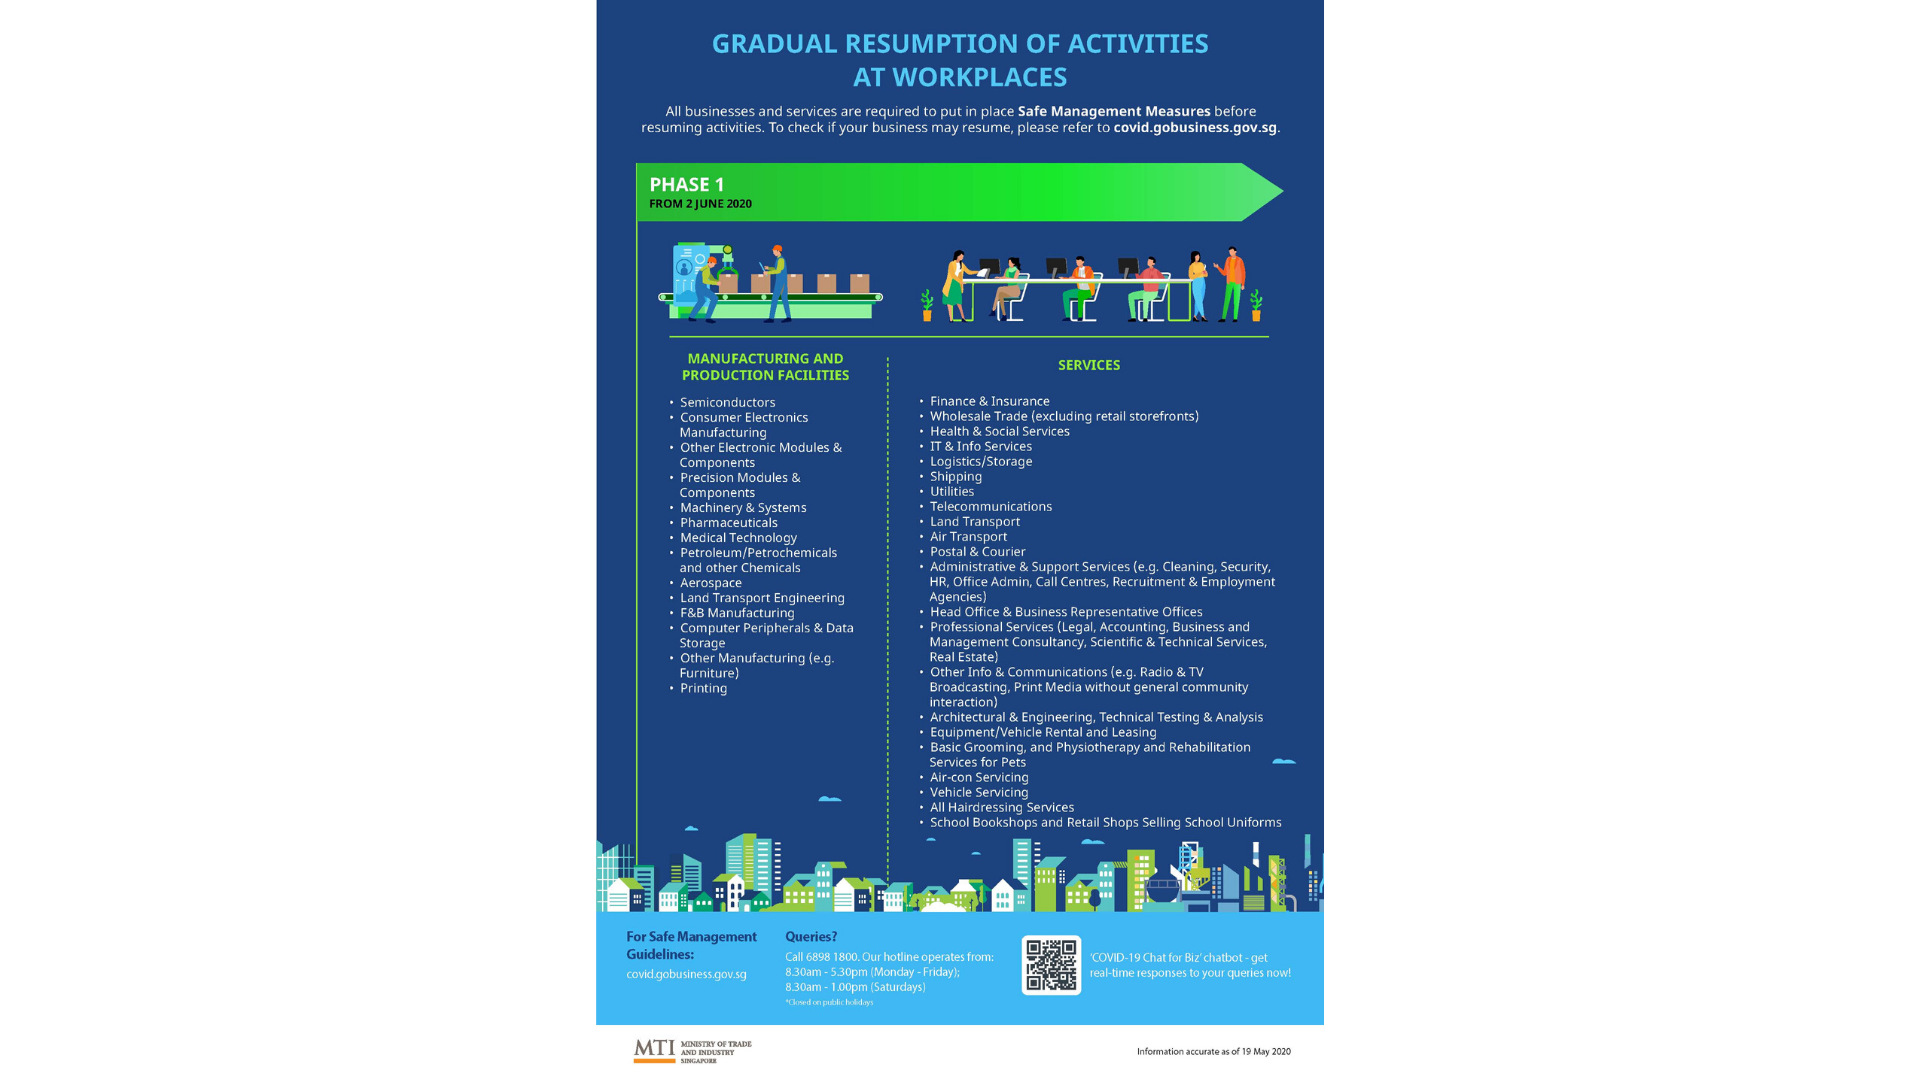 AmCham Singapore - [COVID-19] Advisory on Gradual Resumption of